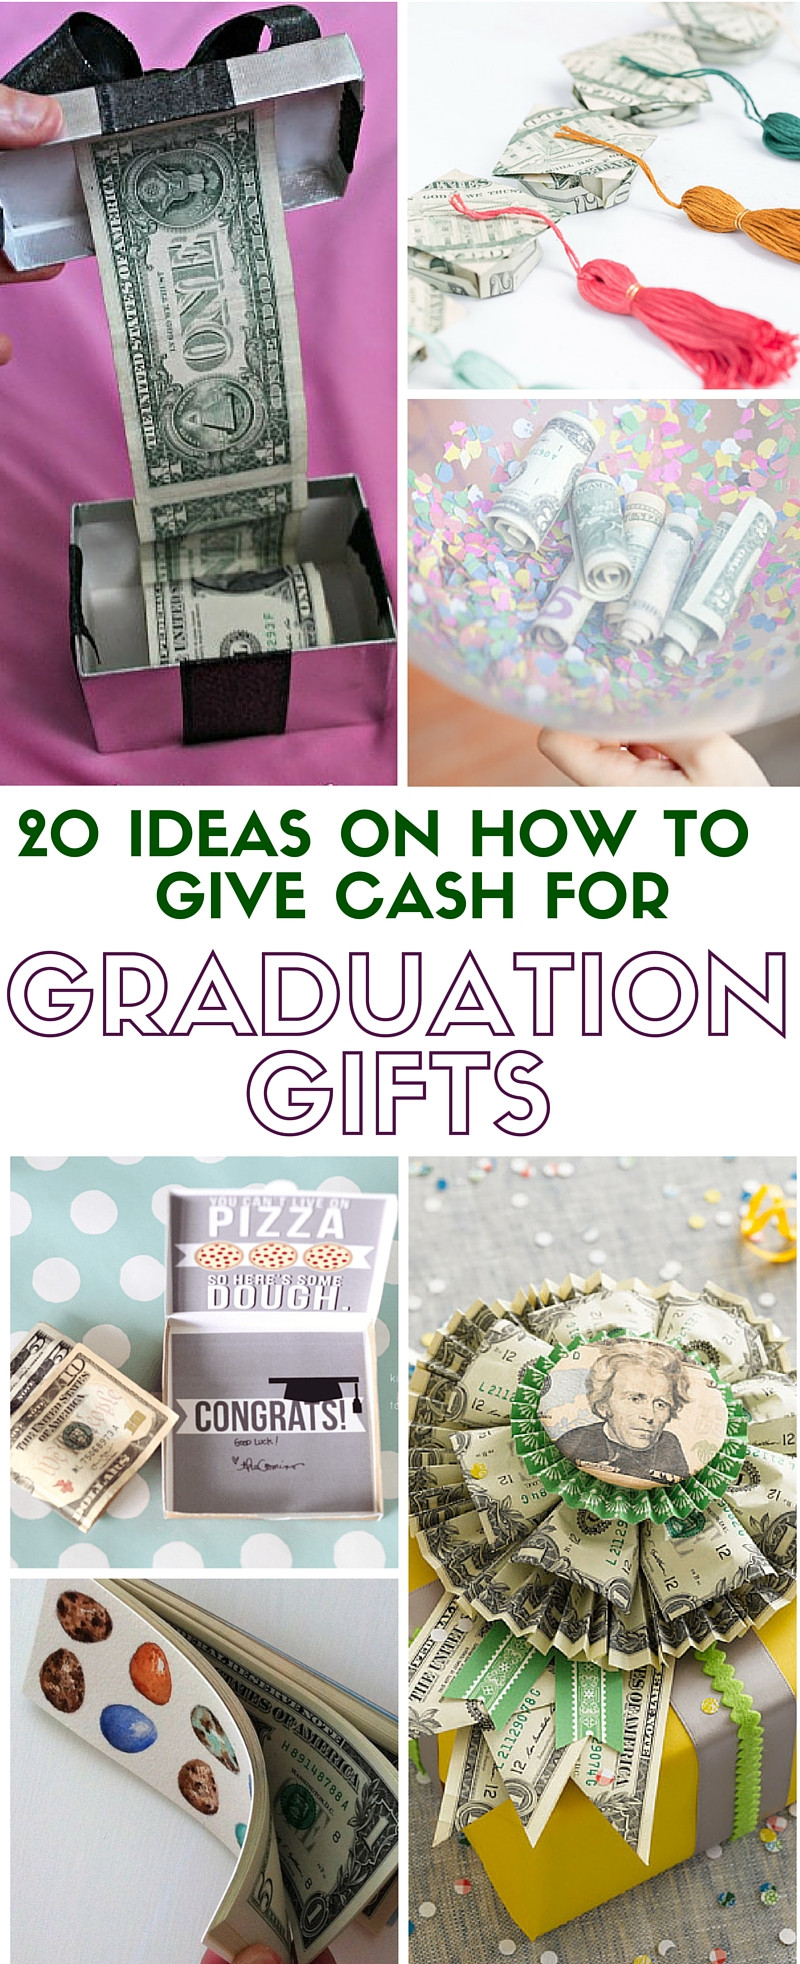 Funny Graduation Gift Ideas
 31 Back To School Teacher Gift Ideas The Crafty Blog Stalker